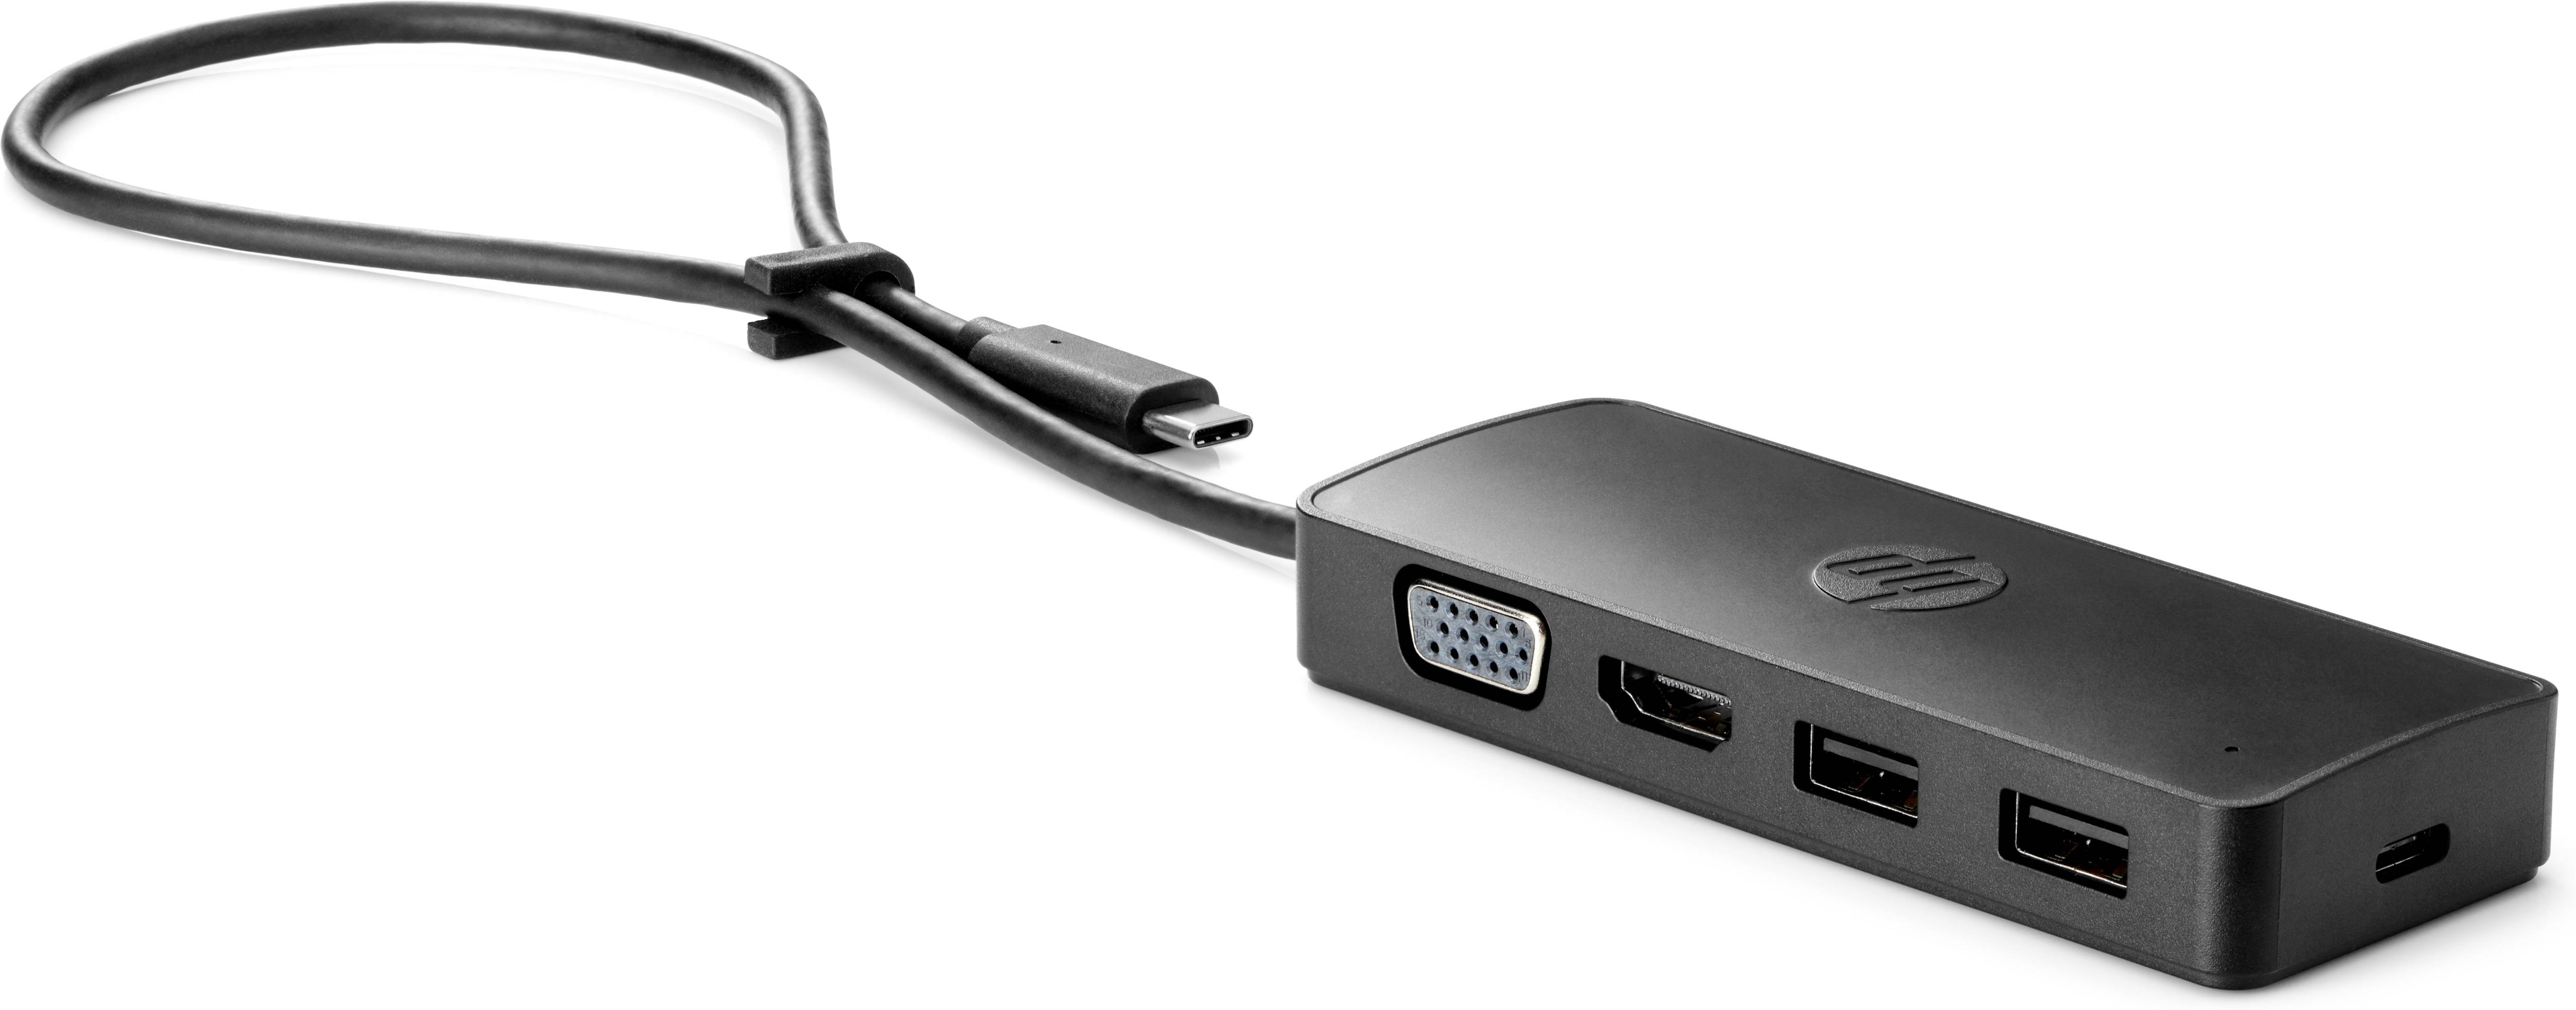 Rca Informatique - image du produit : USB-C TRAVEL HUB G2 .